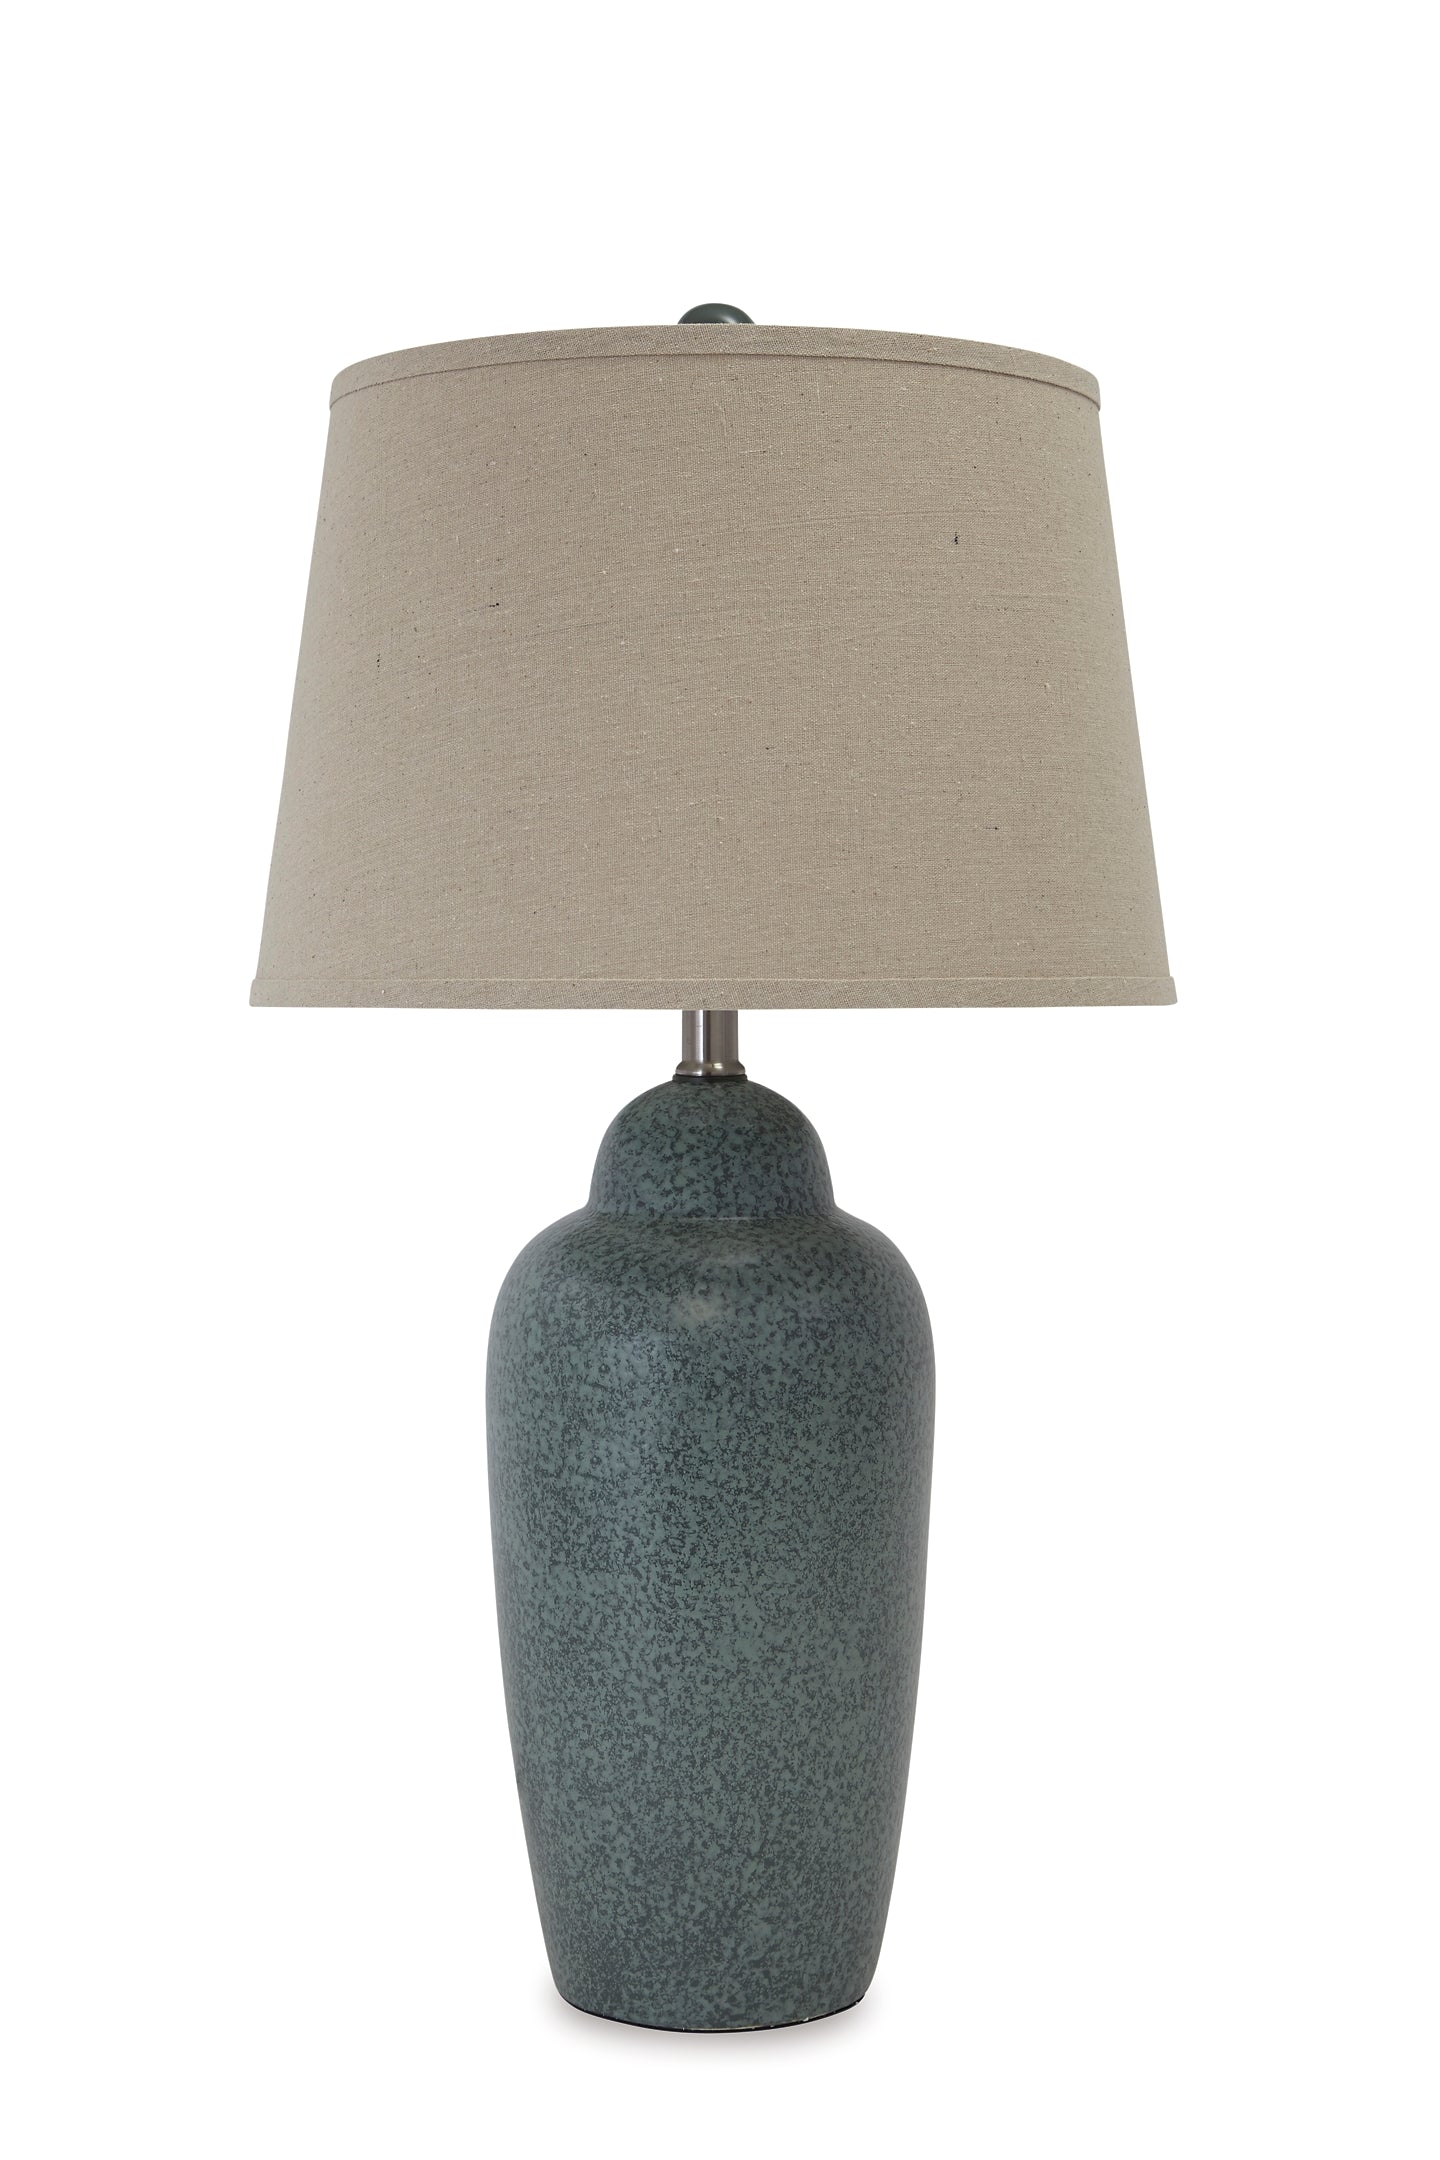 Ashley Express - Saher Ceramic Table Lamp (1/CN)